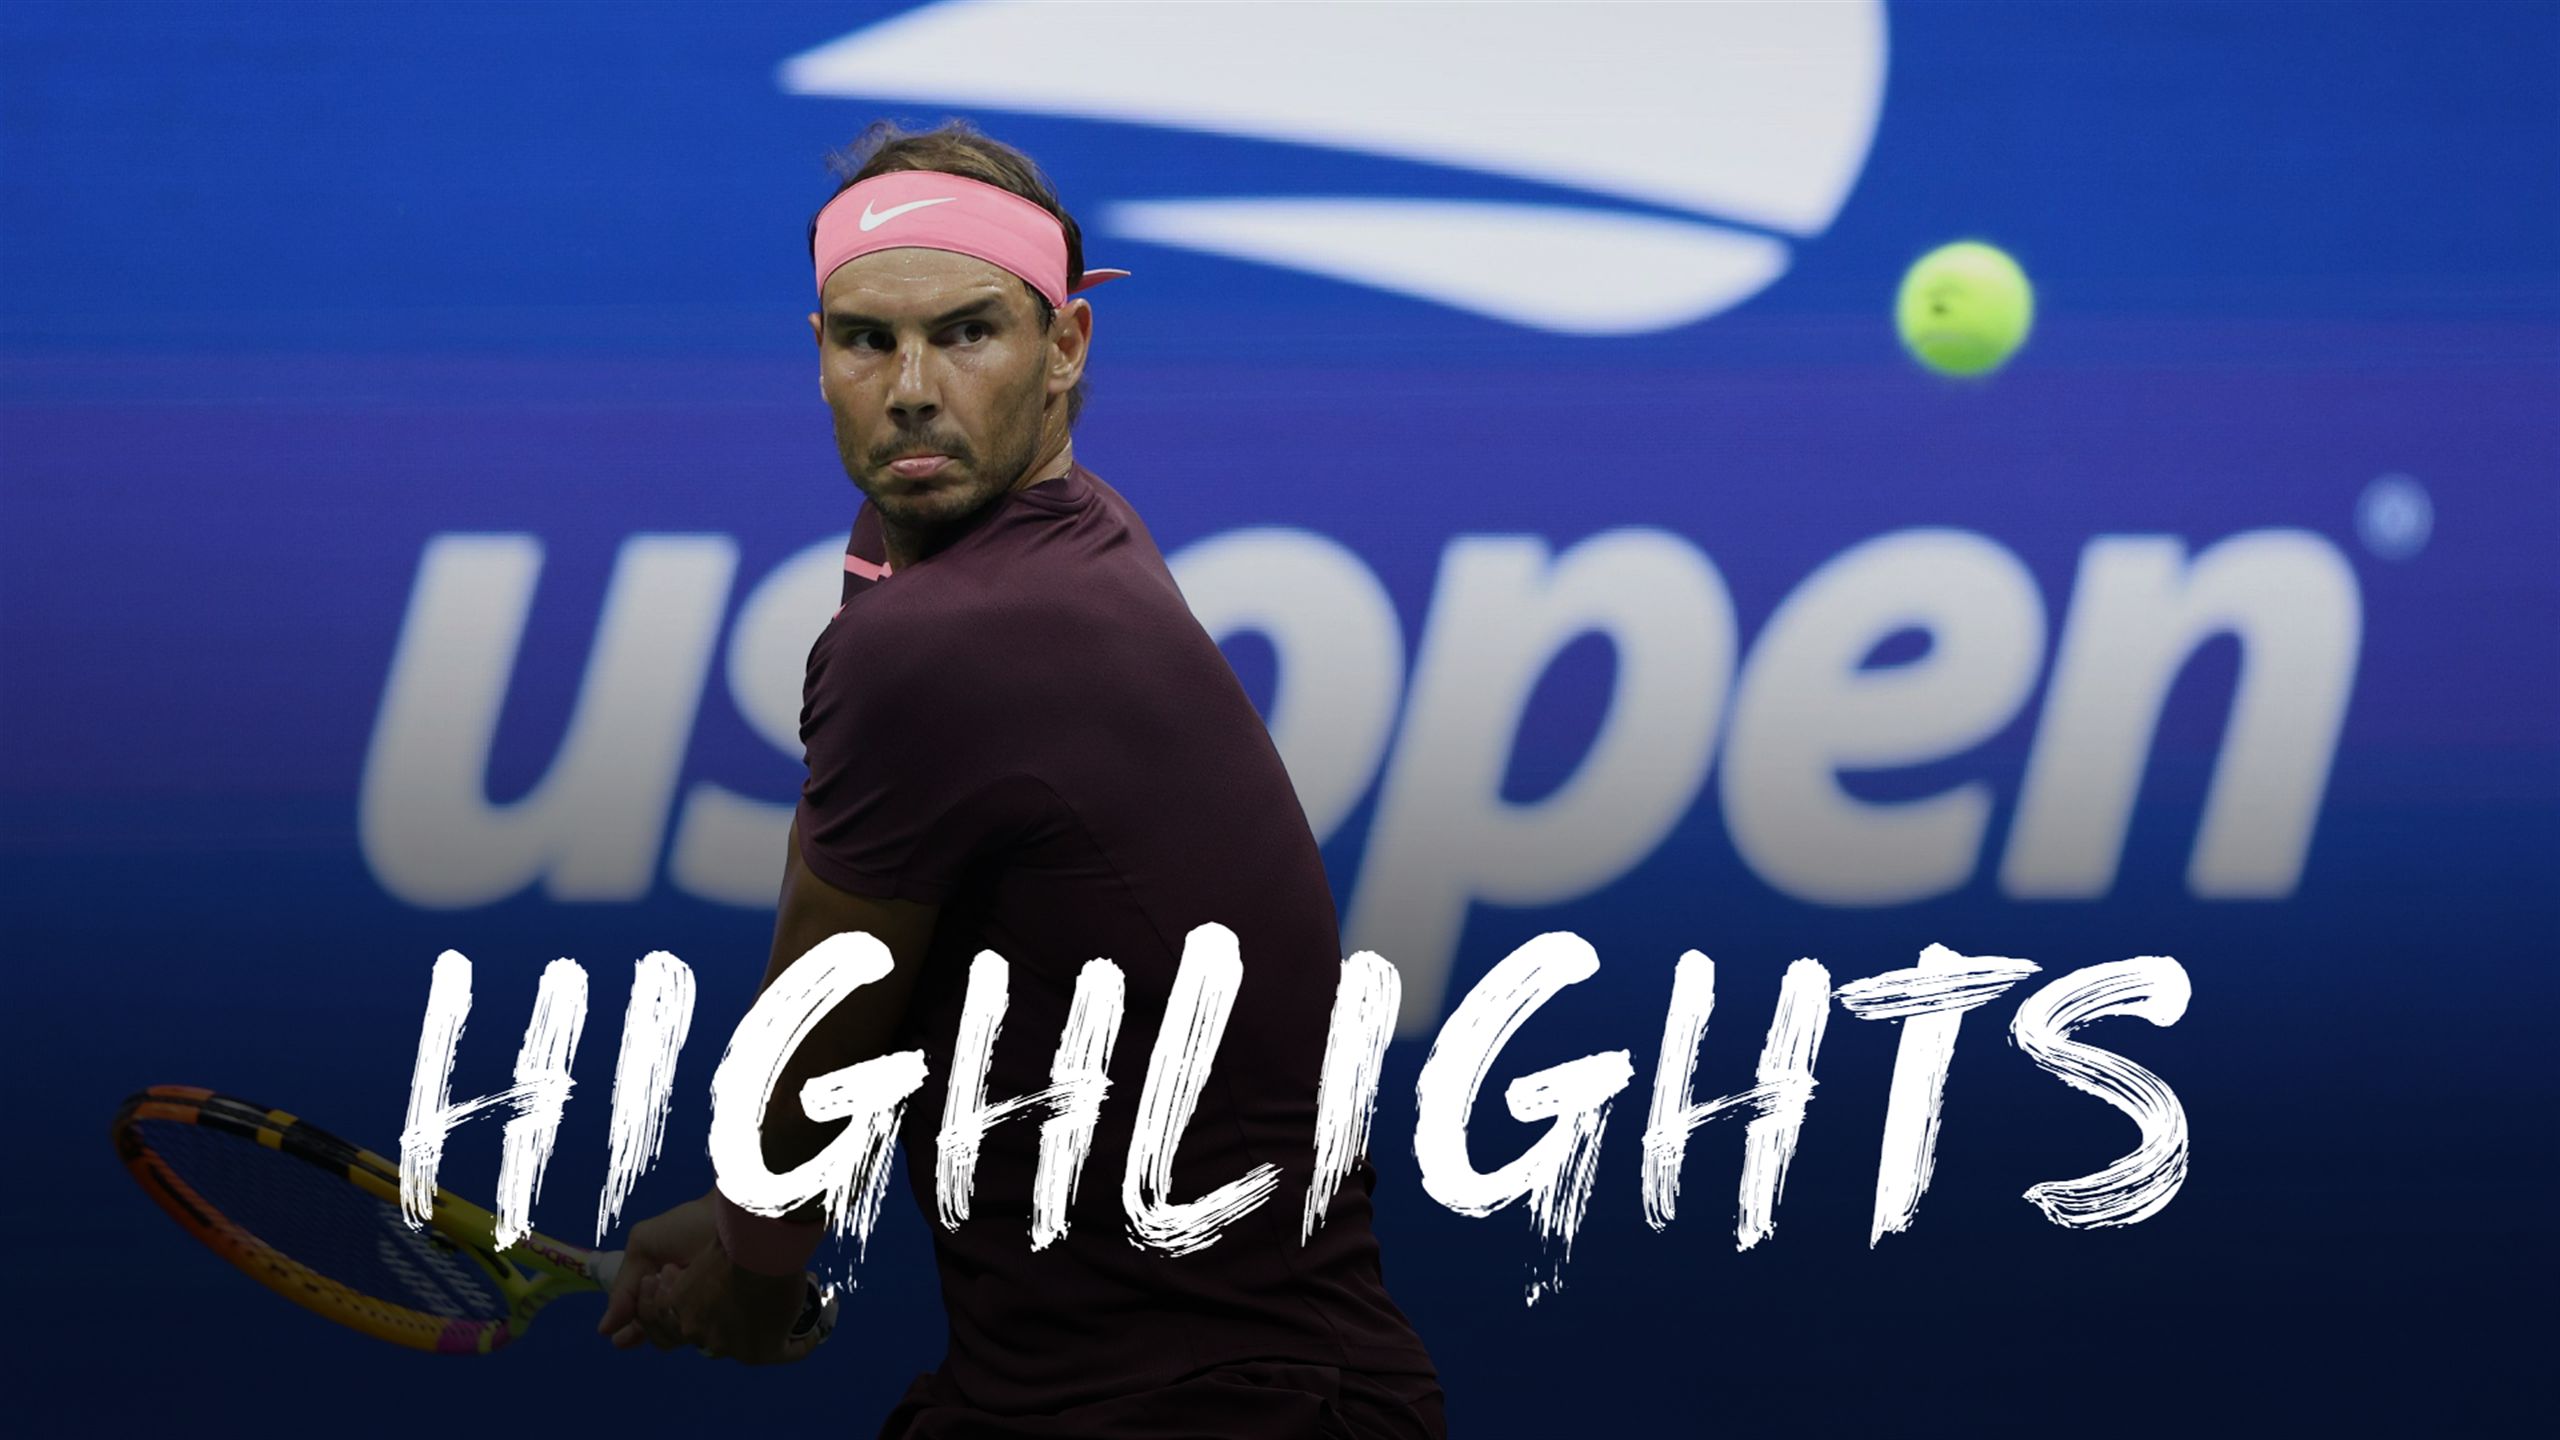 US Open 2022 Rafael Nadal - Richard Gasquet Highlights - 3